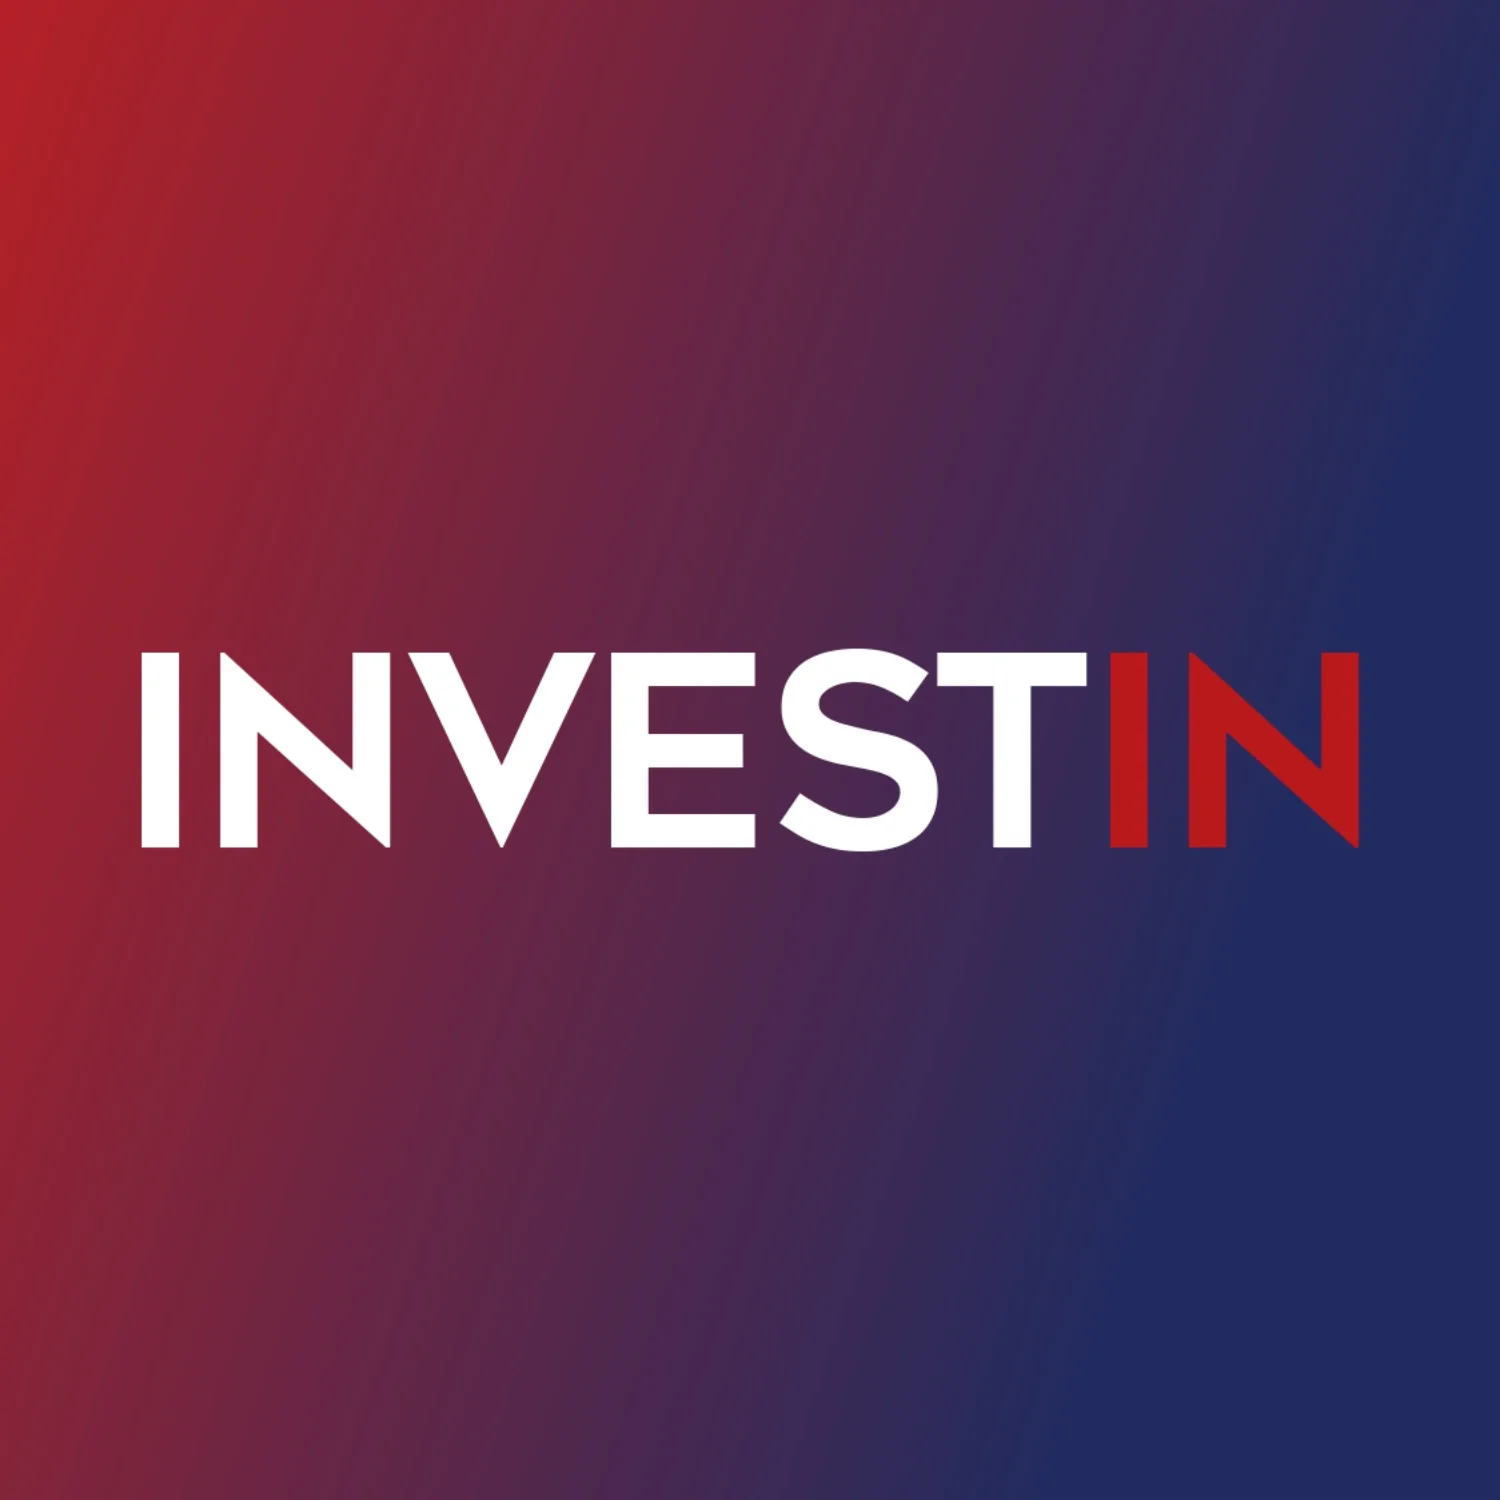 Image of the InvestIN logo